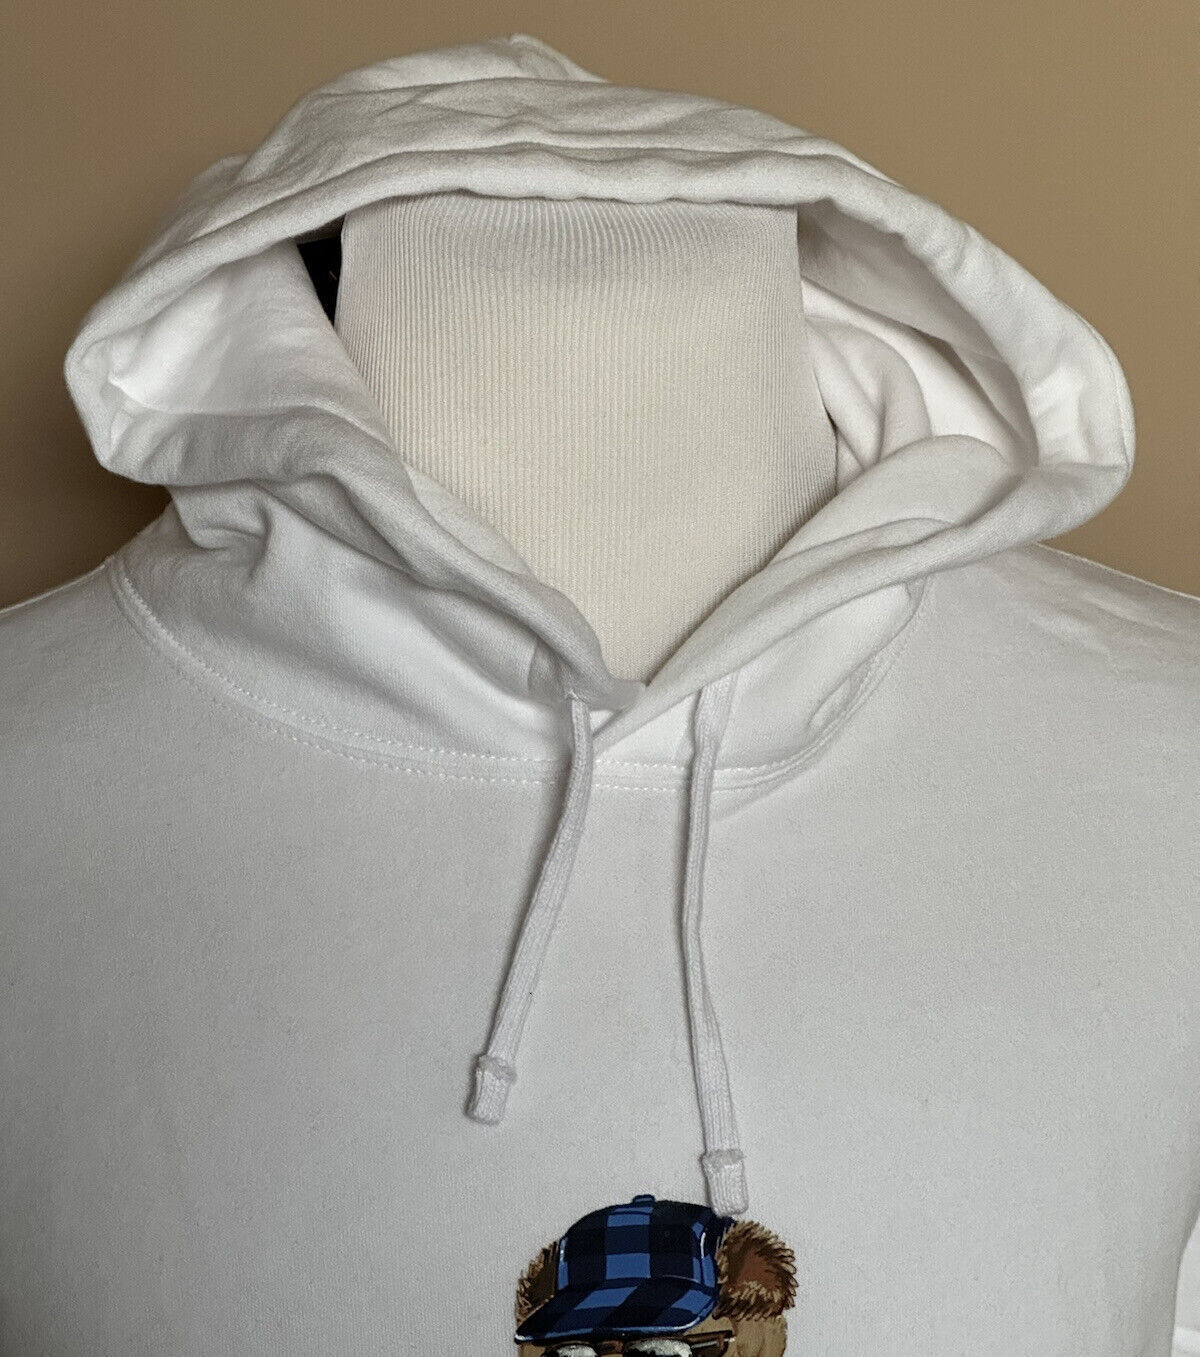 NWT $188 Polo Ralph Lauren Long Sleeve Bear Sweatshirt with Hoodie White 3XB/3TG